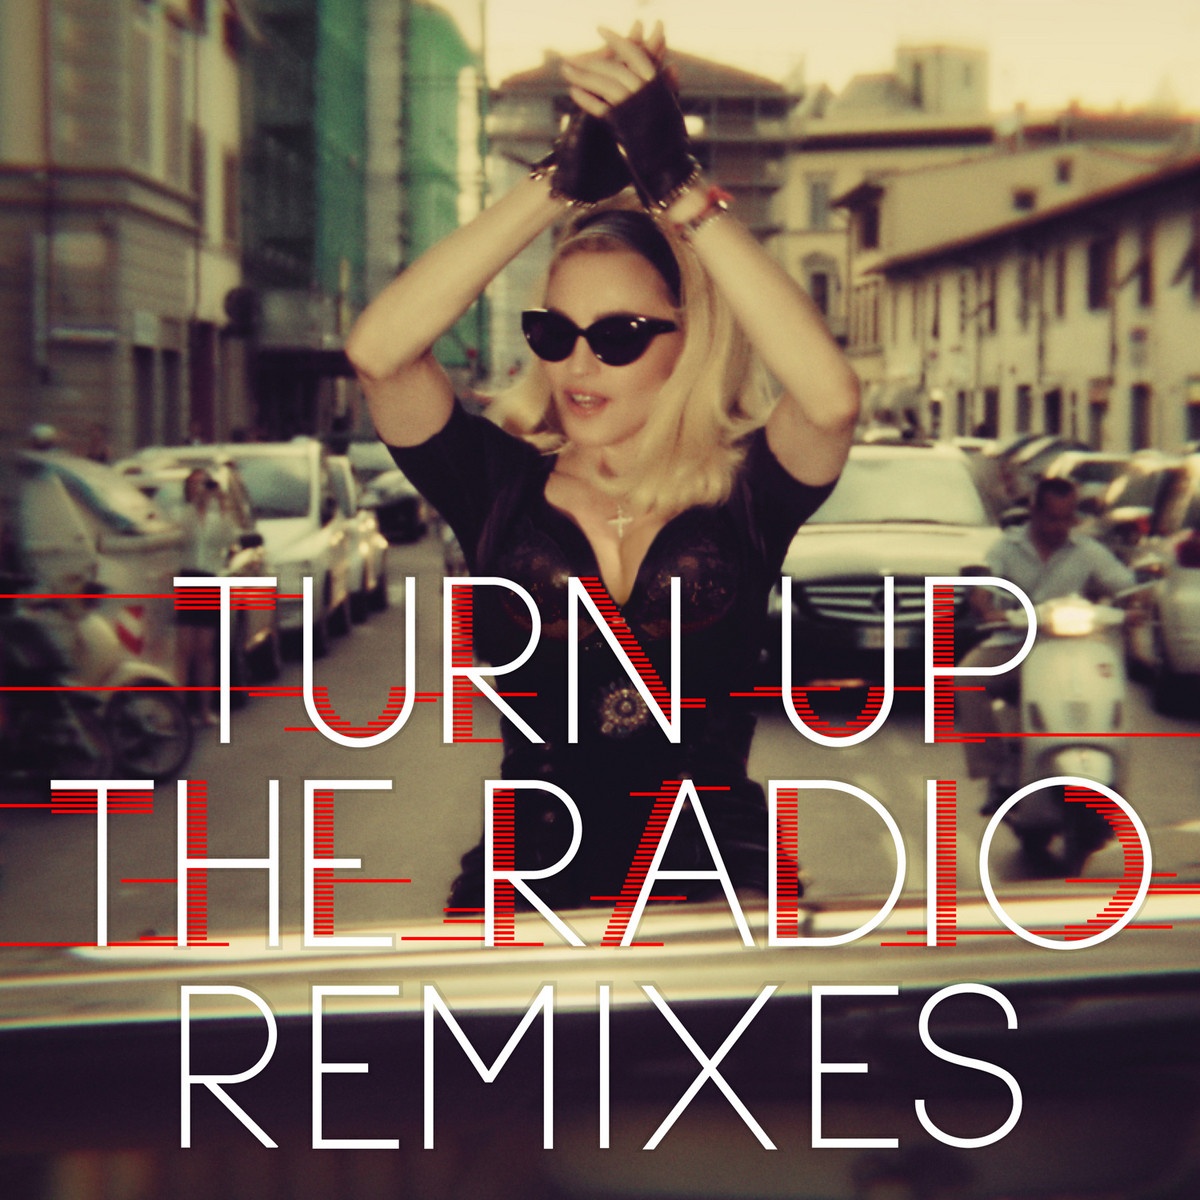 Turn Up The Radio - Martin Solveig Club Mix